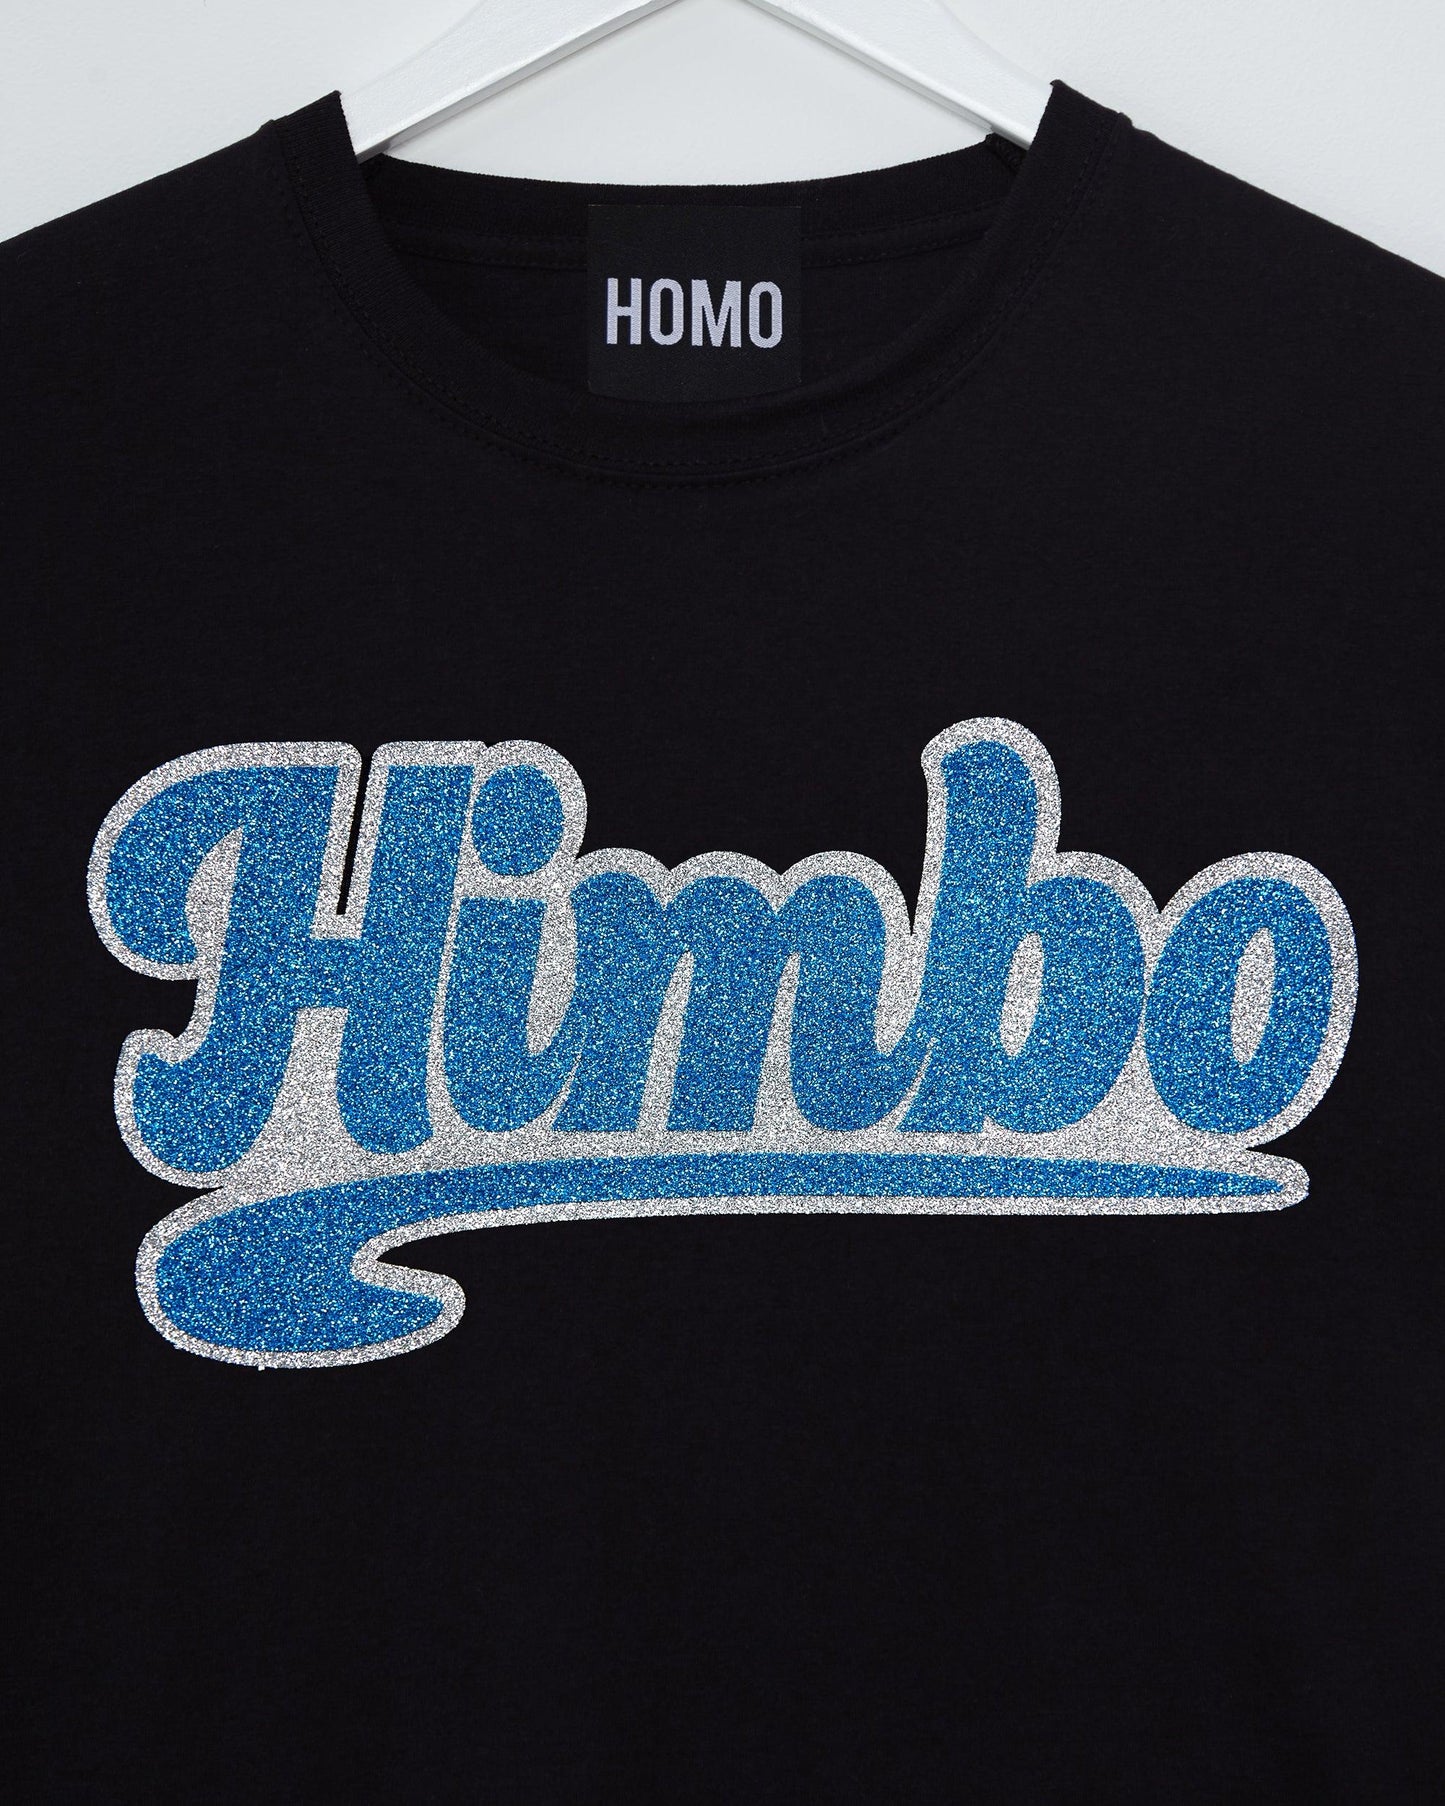 Himbo, blue/silver glitter on black - tee - HOMOLONDON